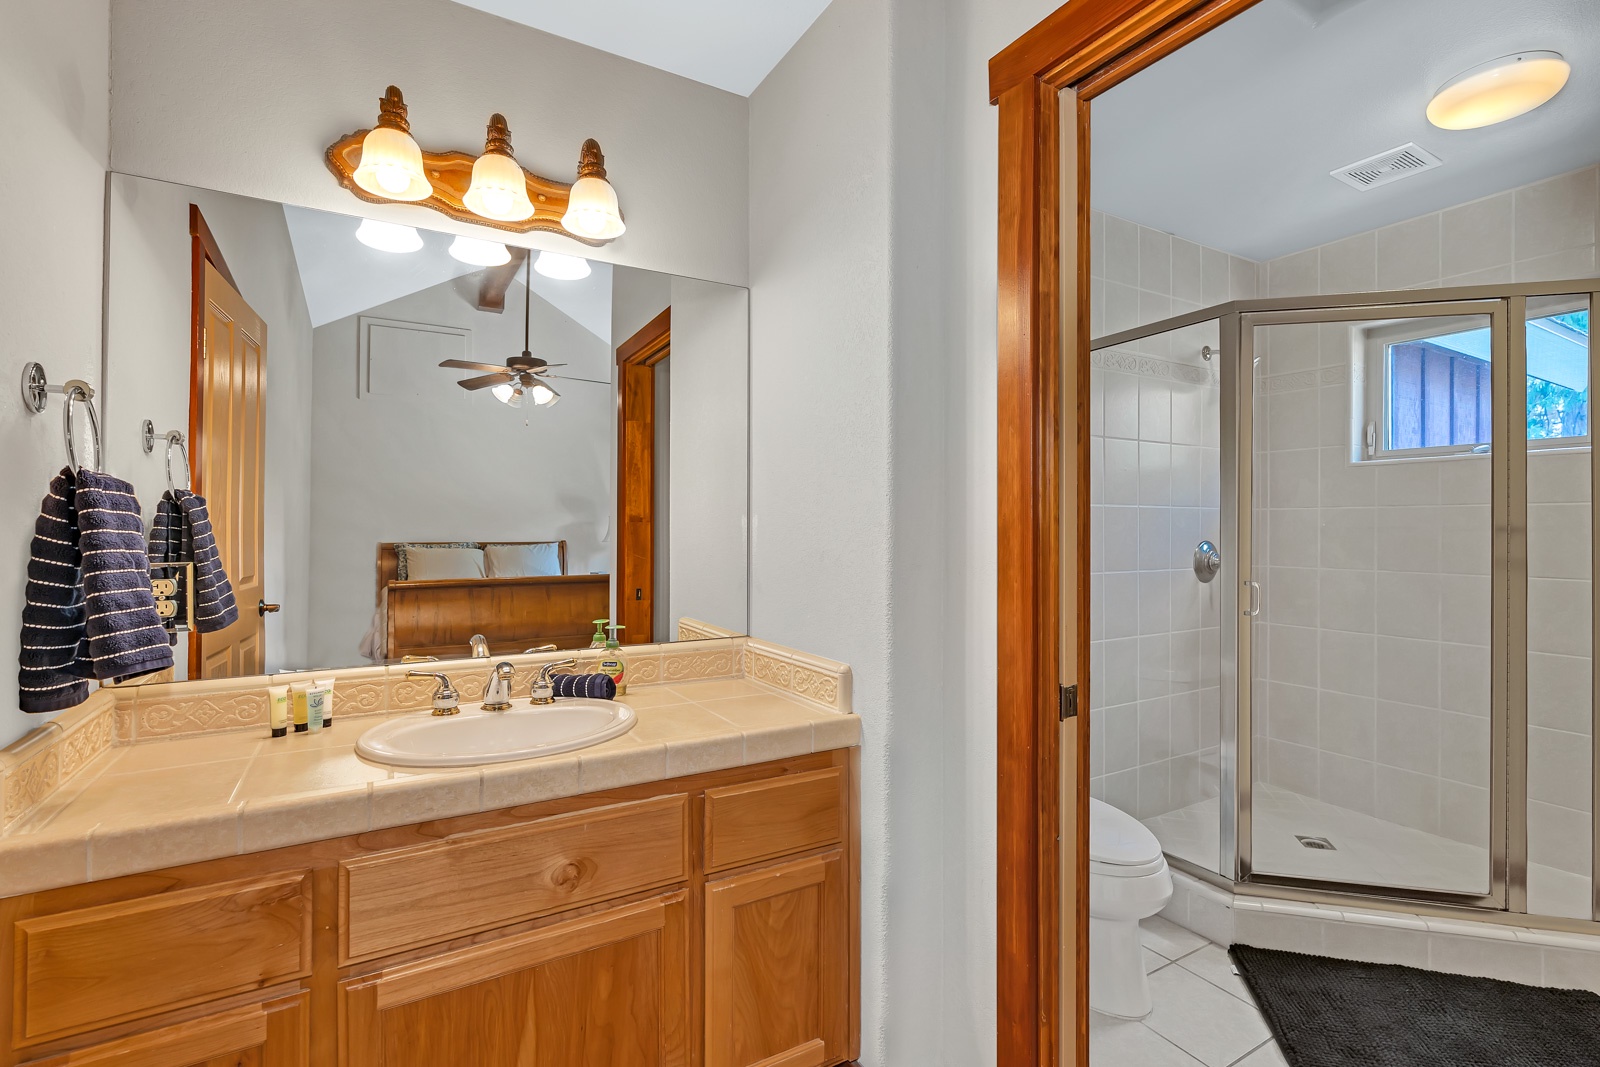 This en suite bathroom includes a single vanity & glass walk-in shower